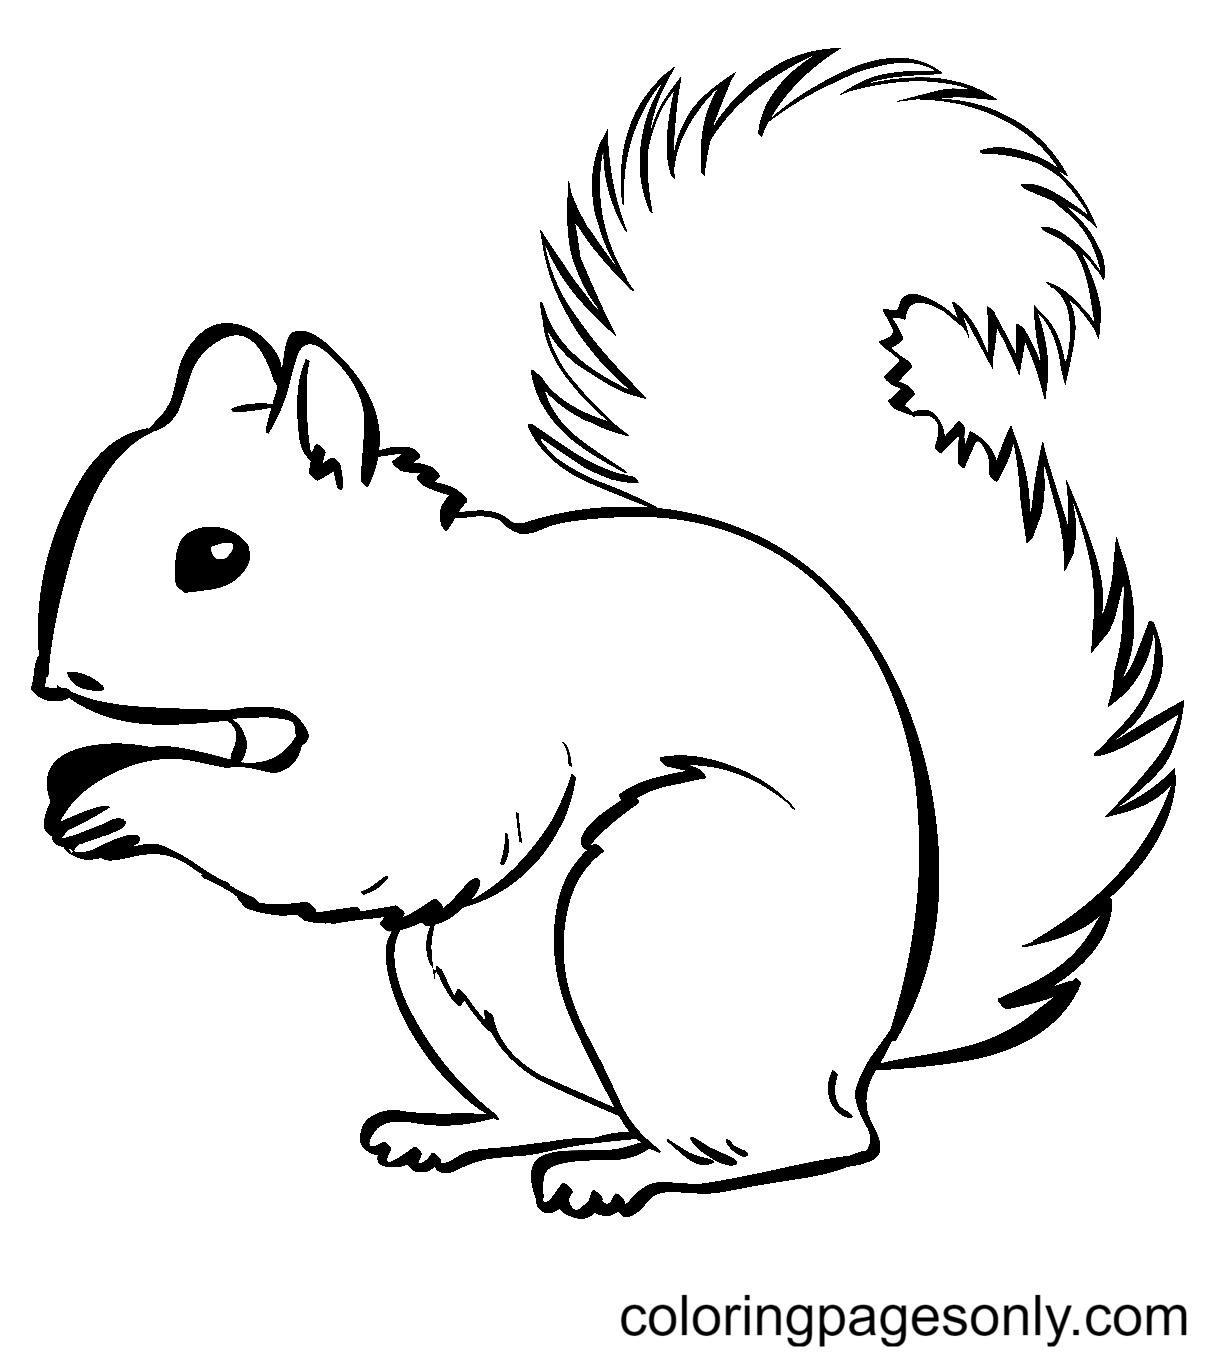 Squirrel Free Coloring Page